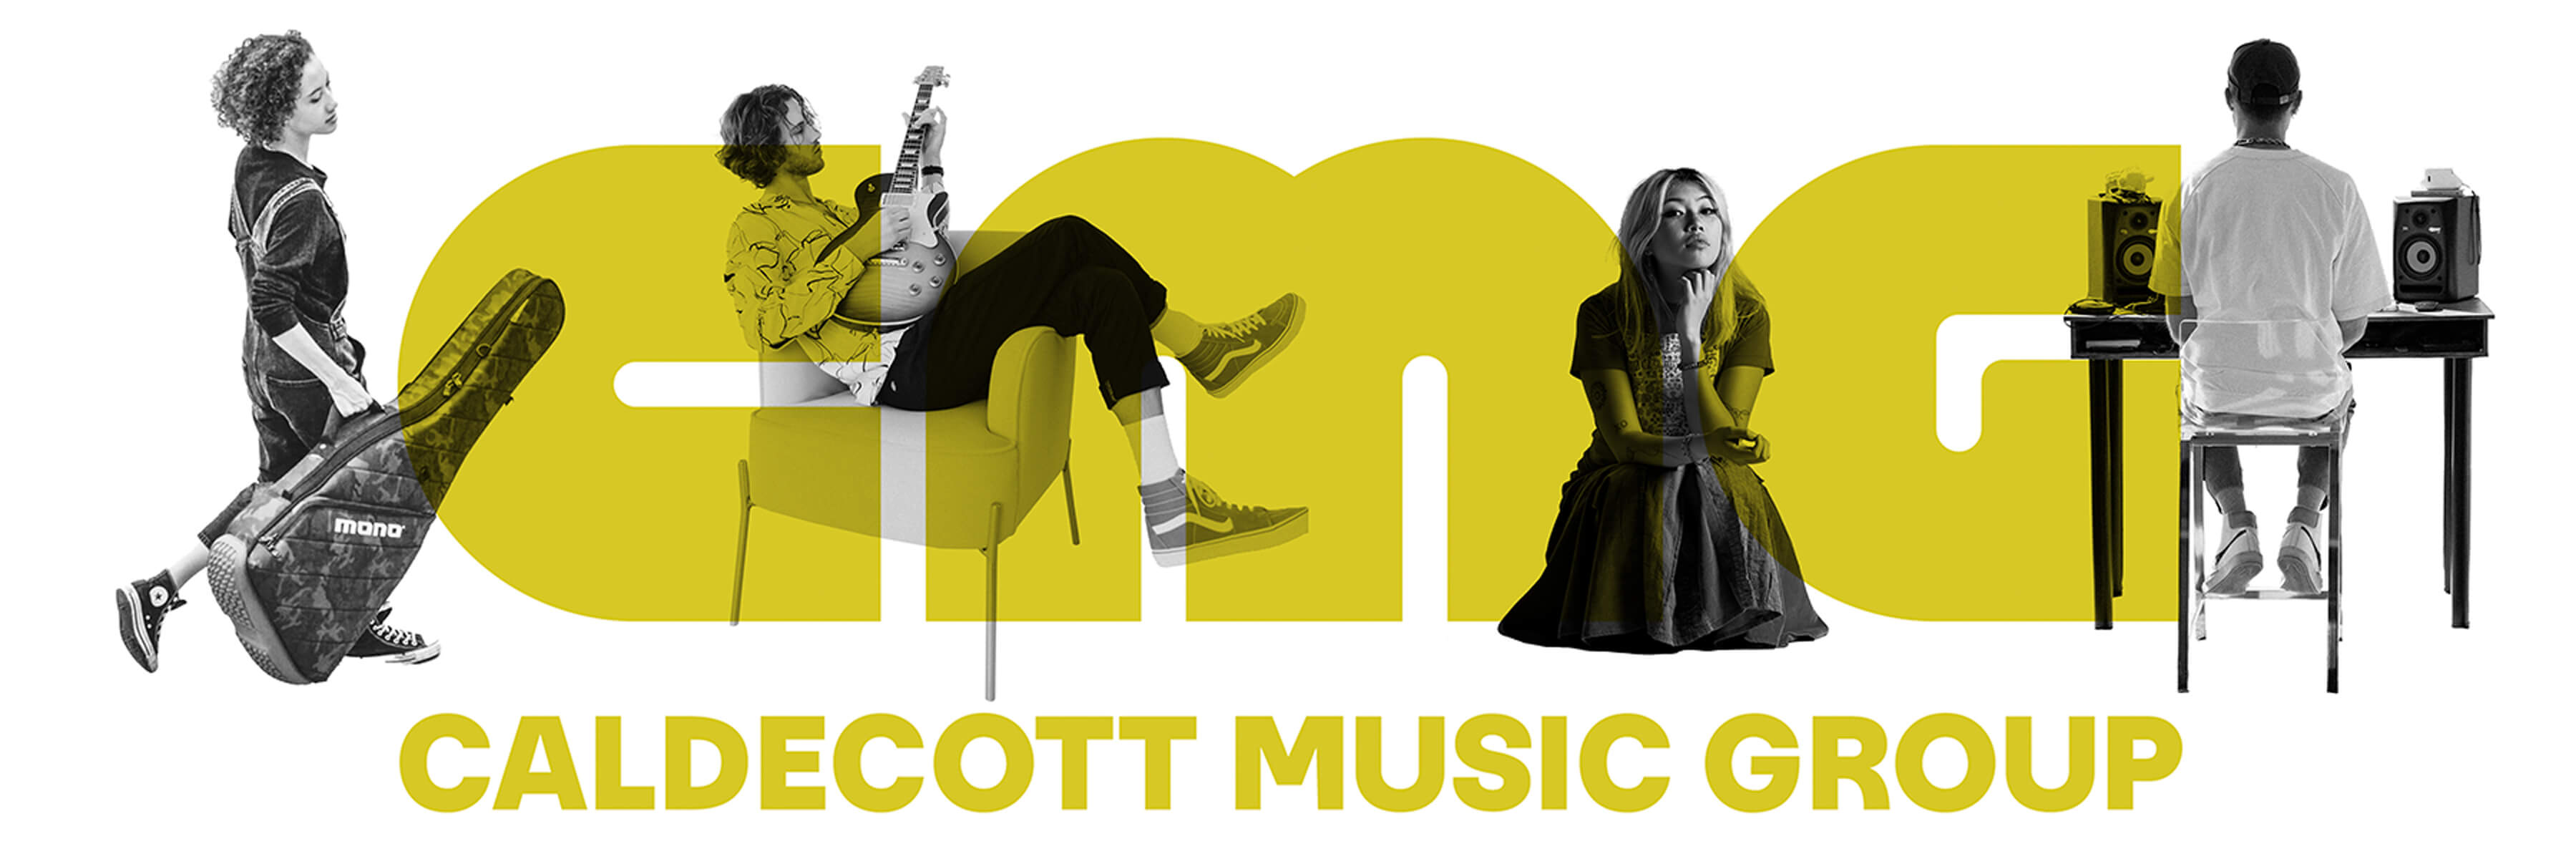 Caldecott Music Group Illustrated Logo